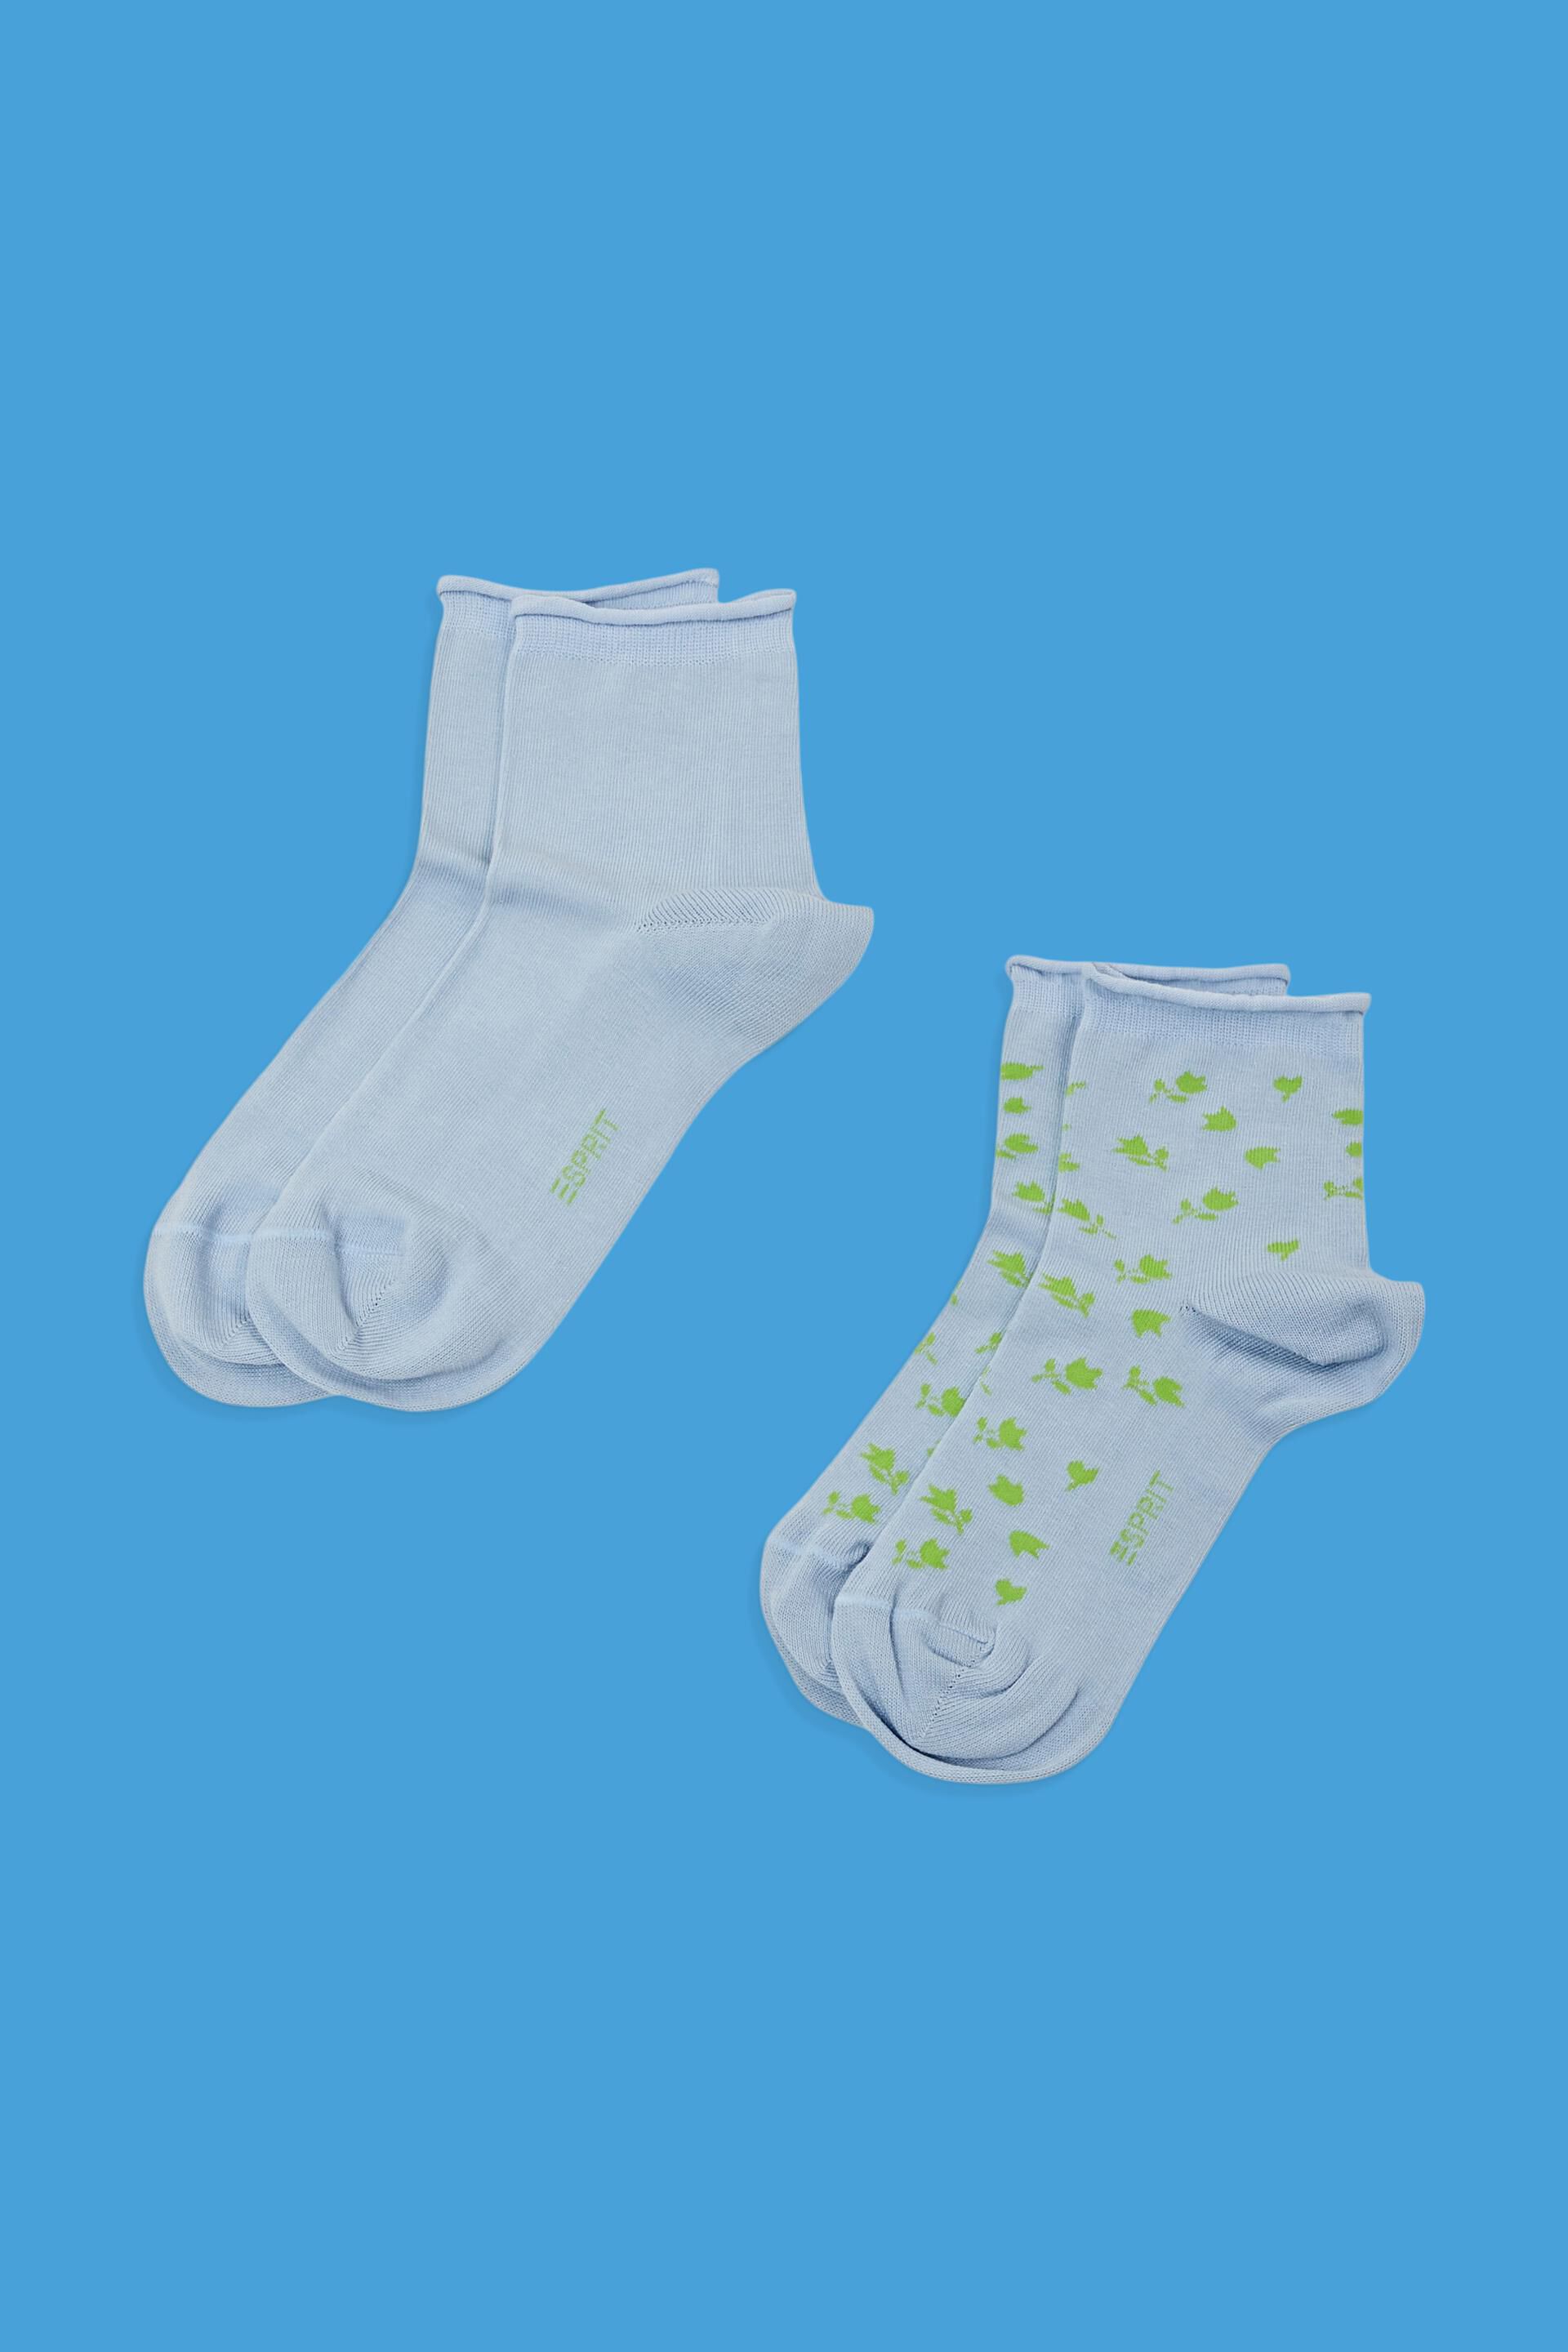 Esprit 2-pack with short of socks floral pattern